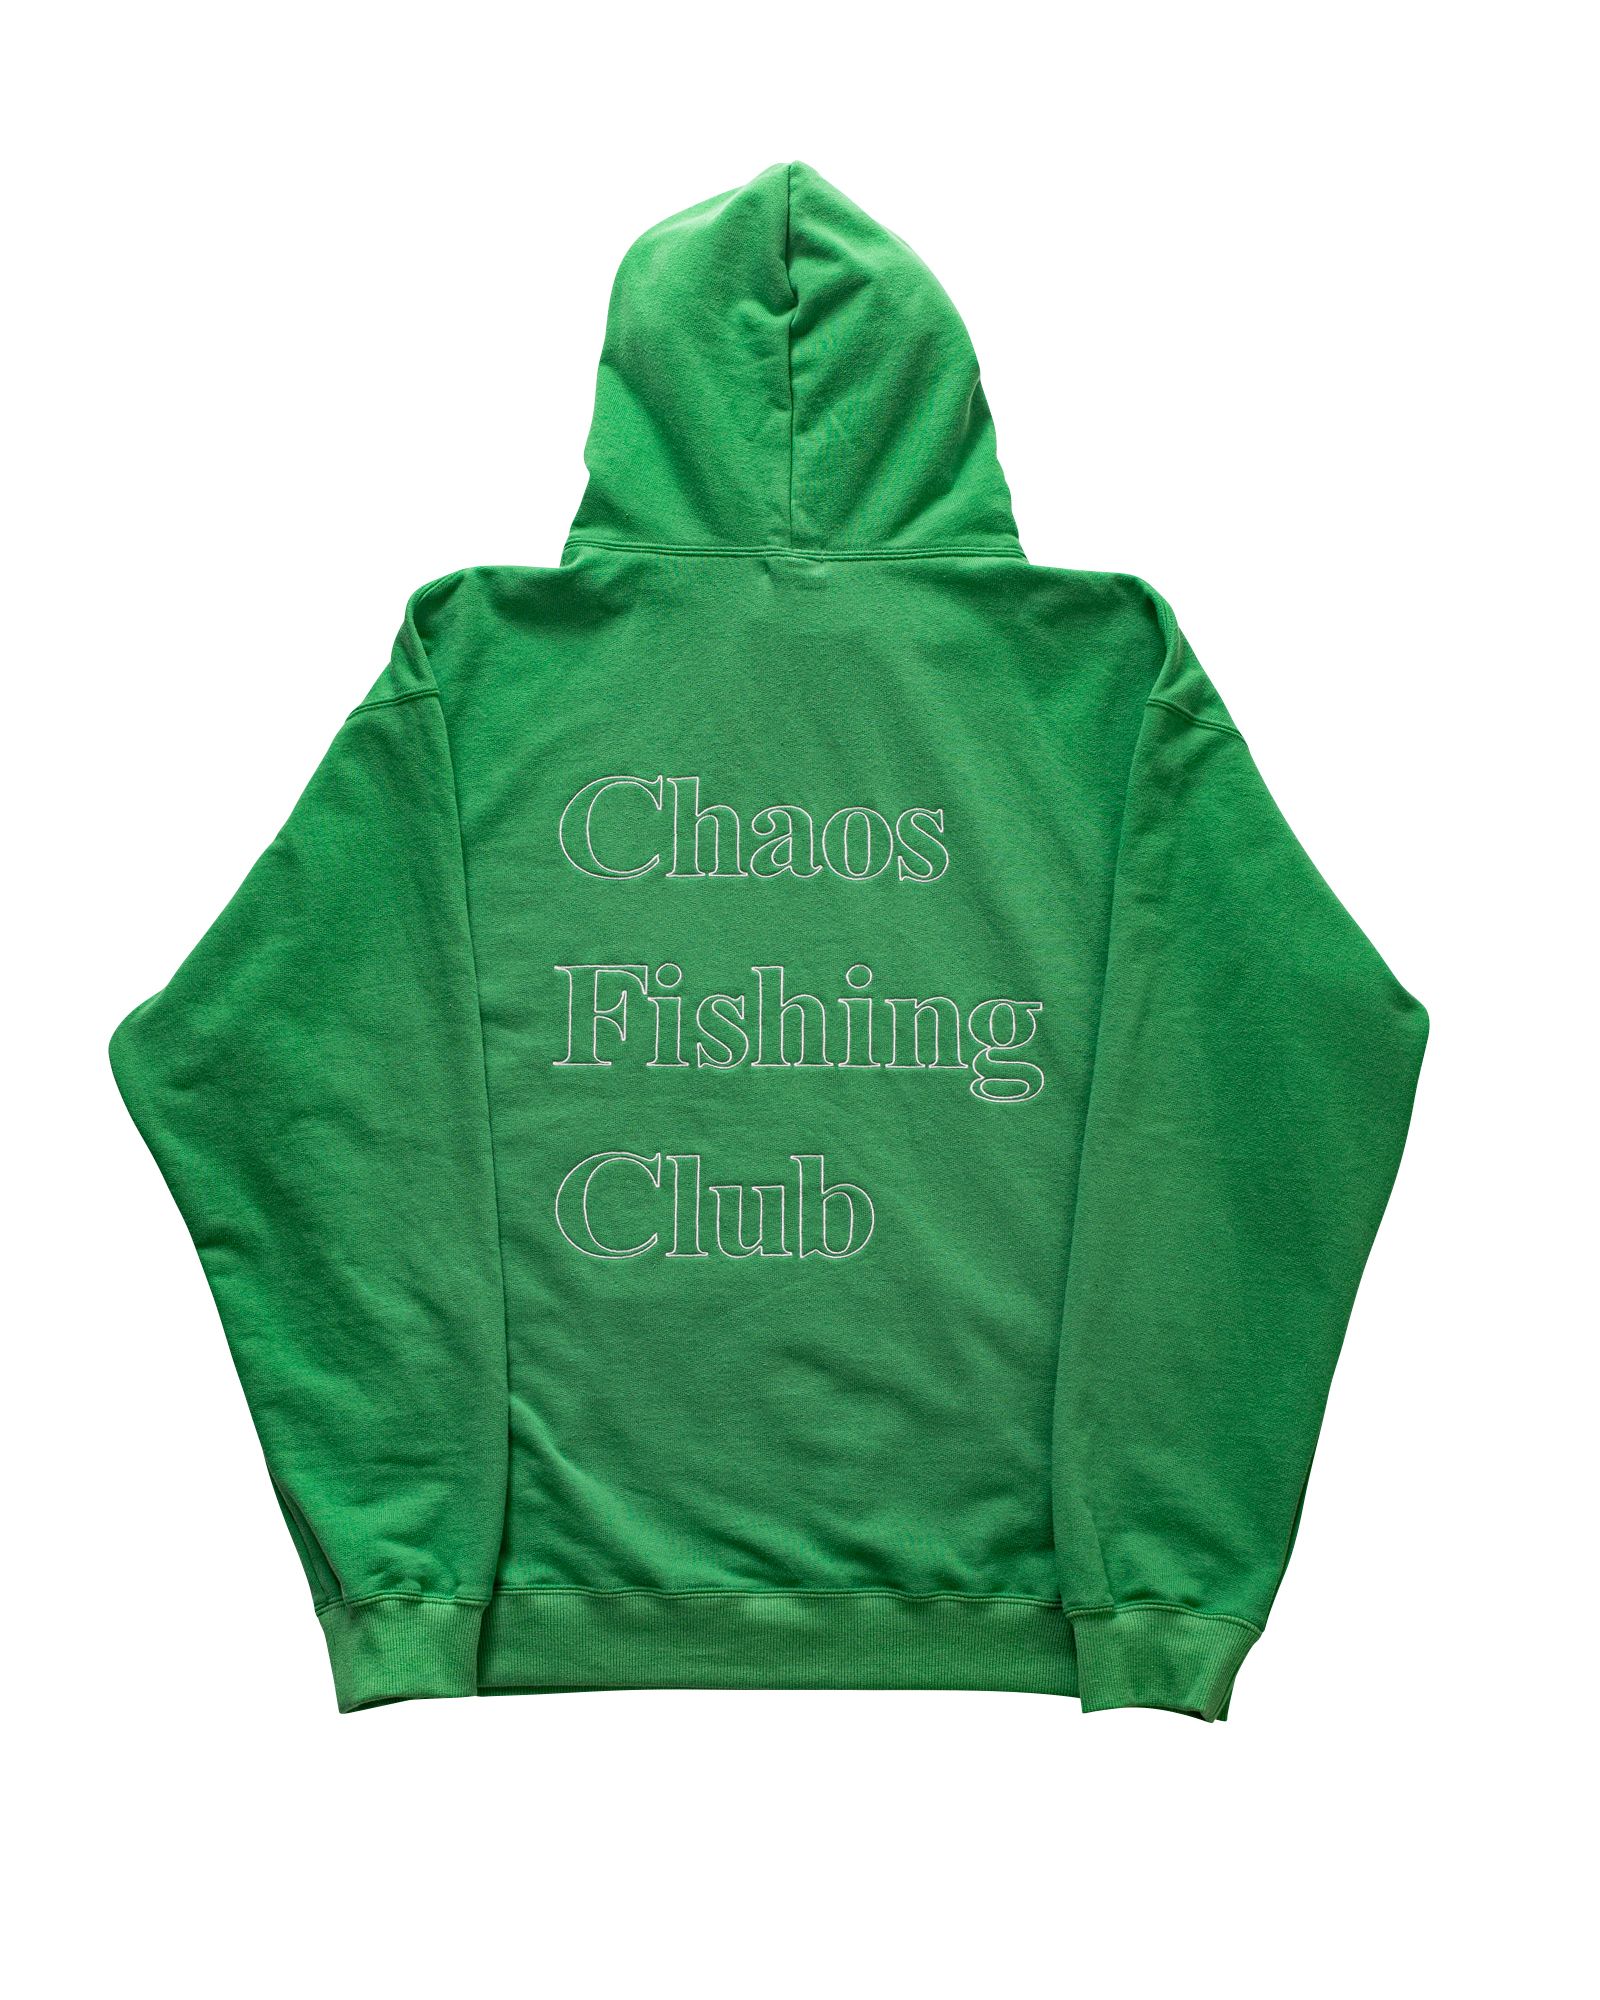 Chaos Fishing Club - OG LOGO HOODIE / GREEN | Stripe Online Store